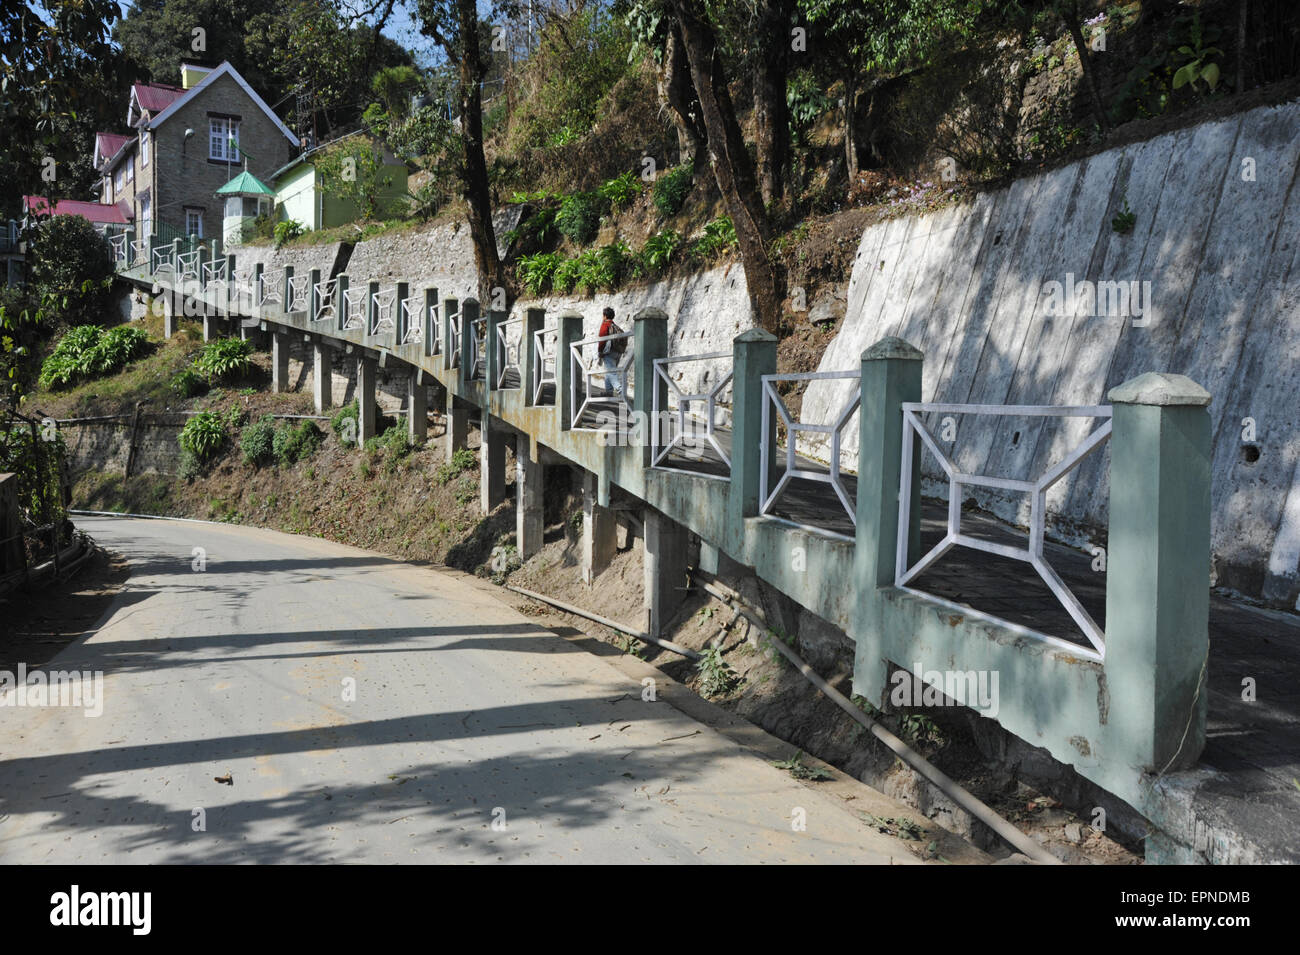 Walkway to an Anglo English house in Darjeeling. Stock Photo